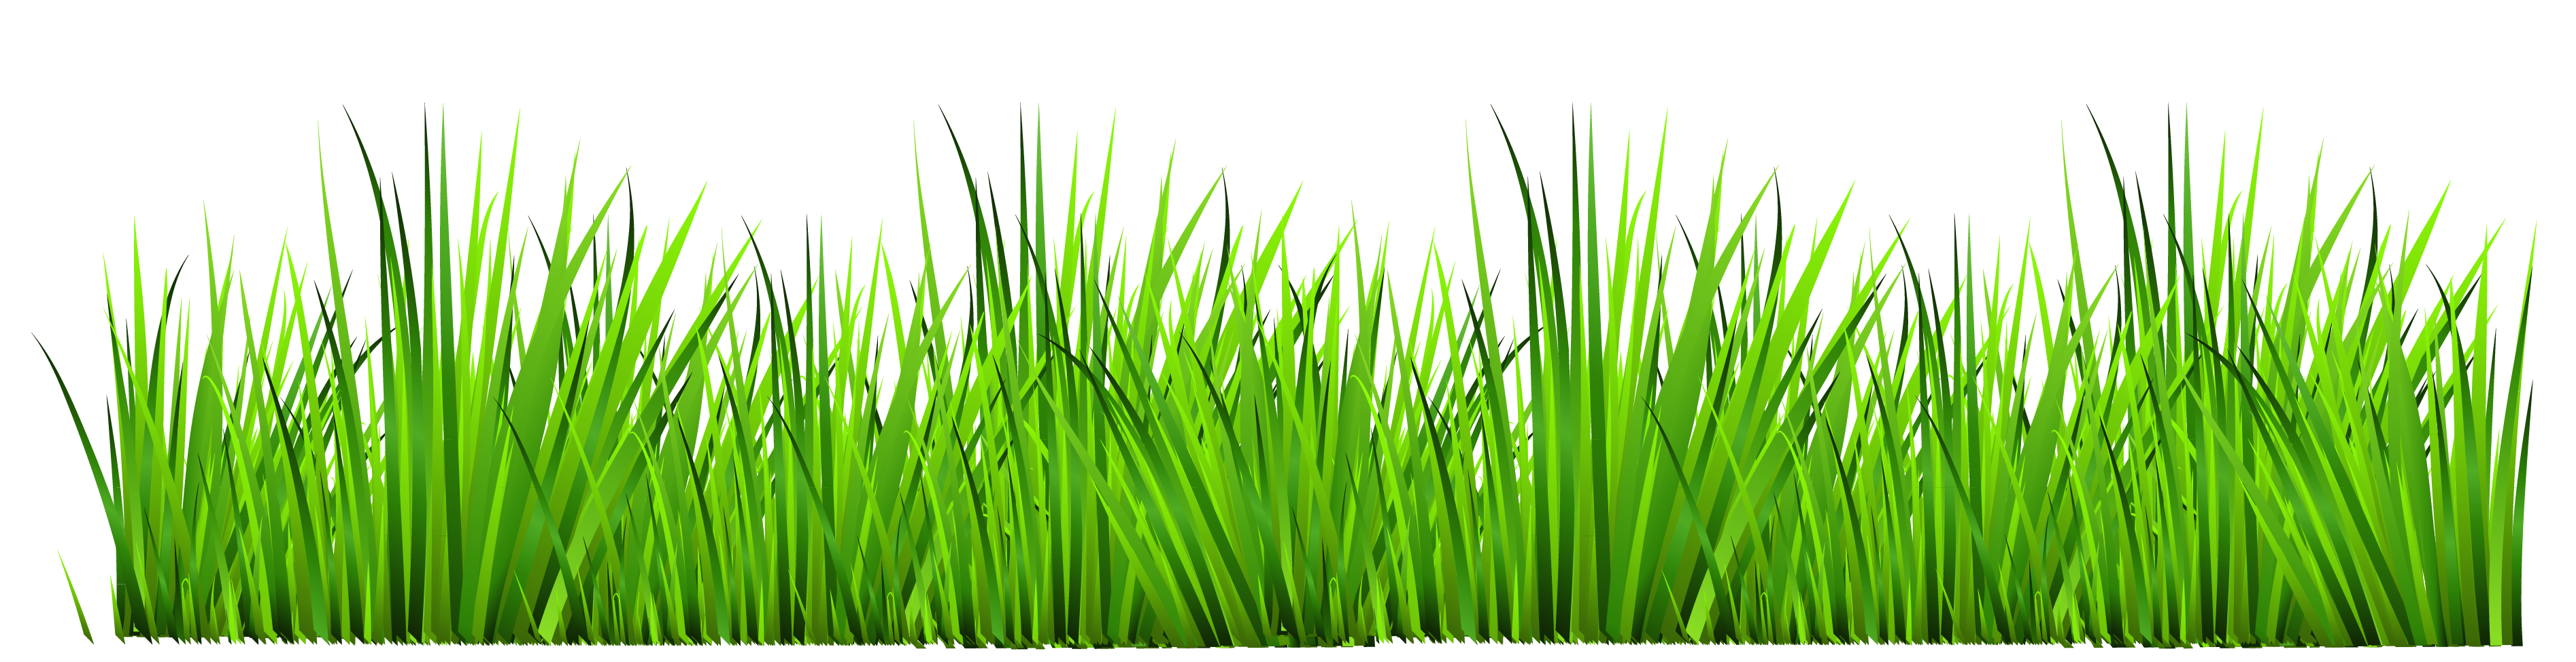 Clipart grass. Free cliparts download clip